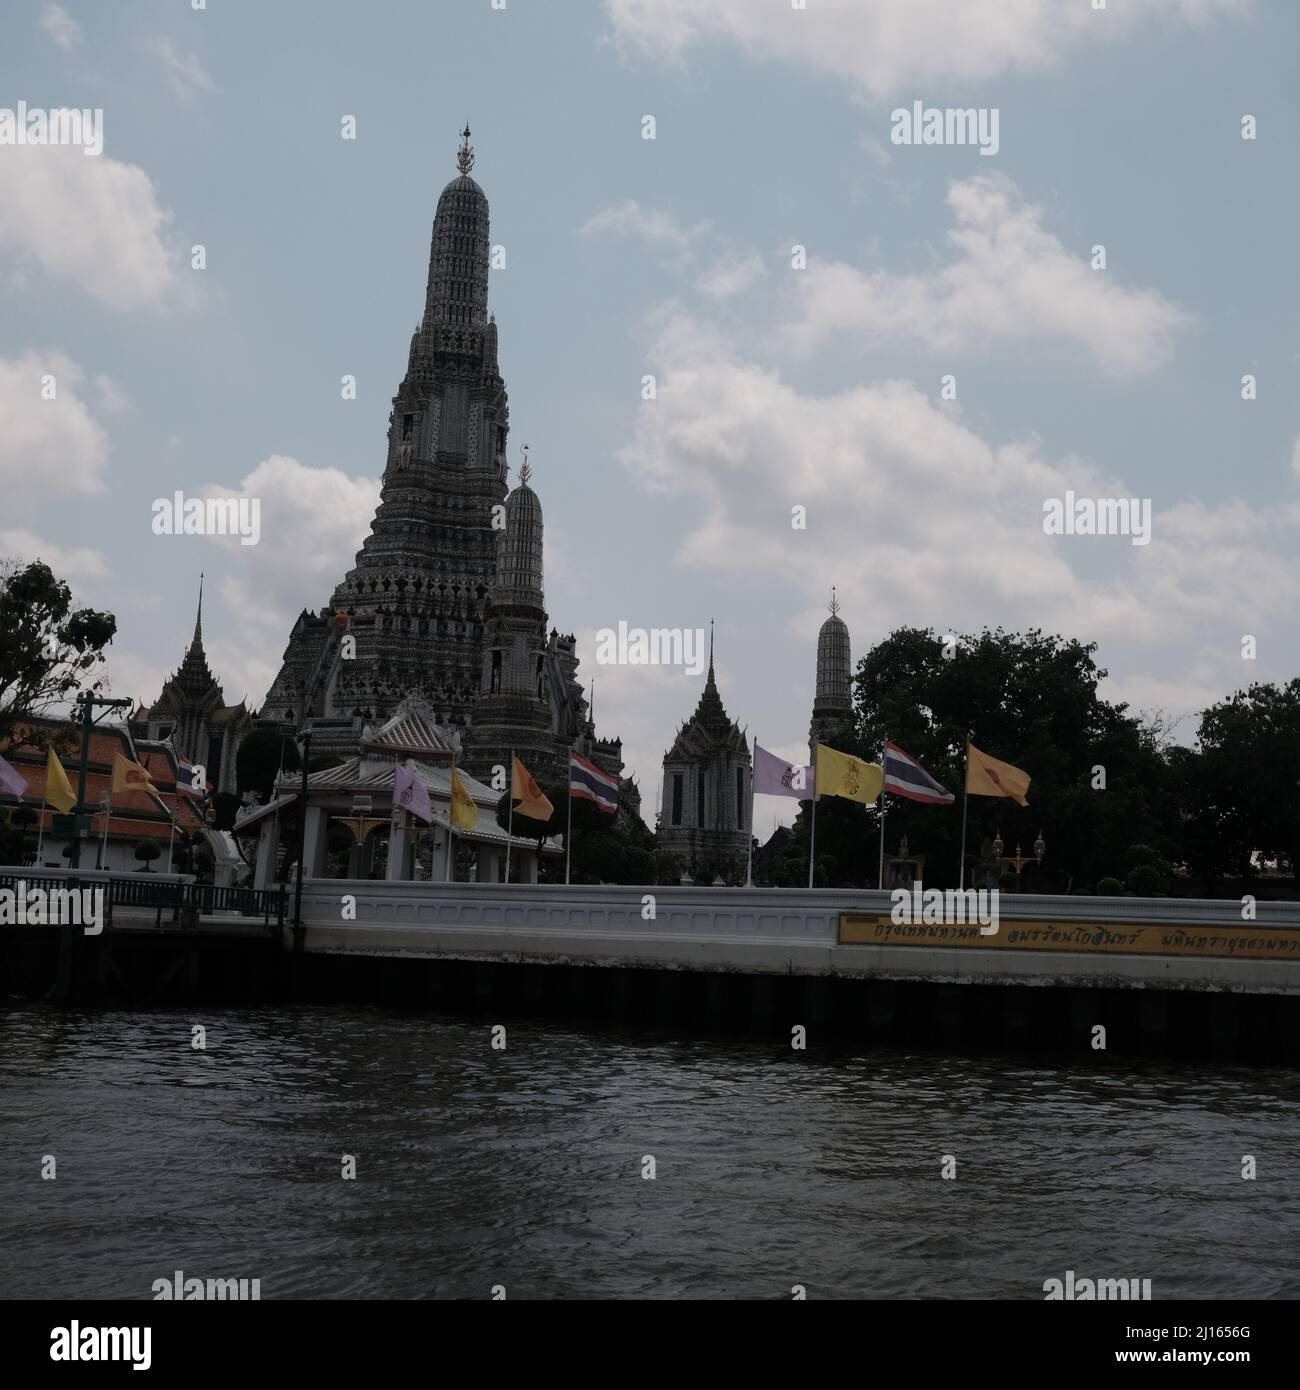 Templo budista del amanecer aka Wat Arun Ratchawaram Ratchawaramahawihan aka Wat Arun en el río Chao Phraya Bangkok Tailandia Foto de stock